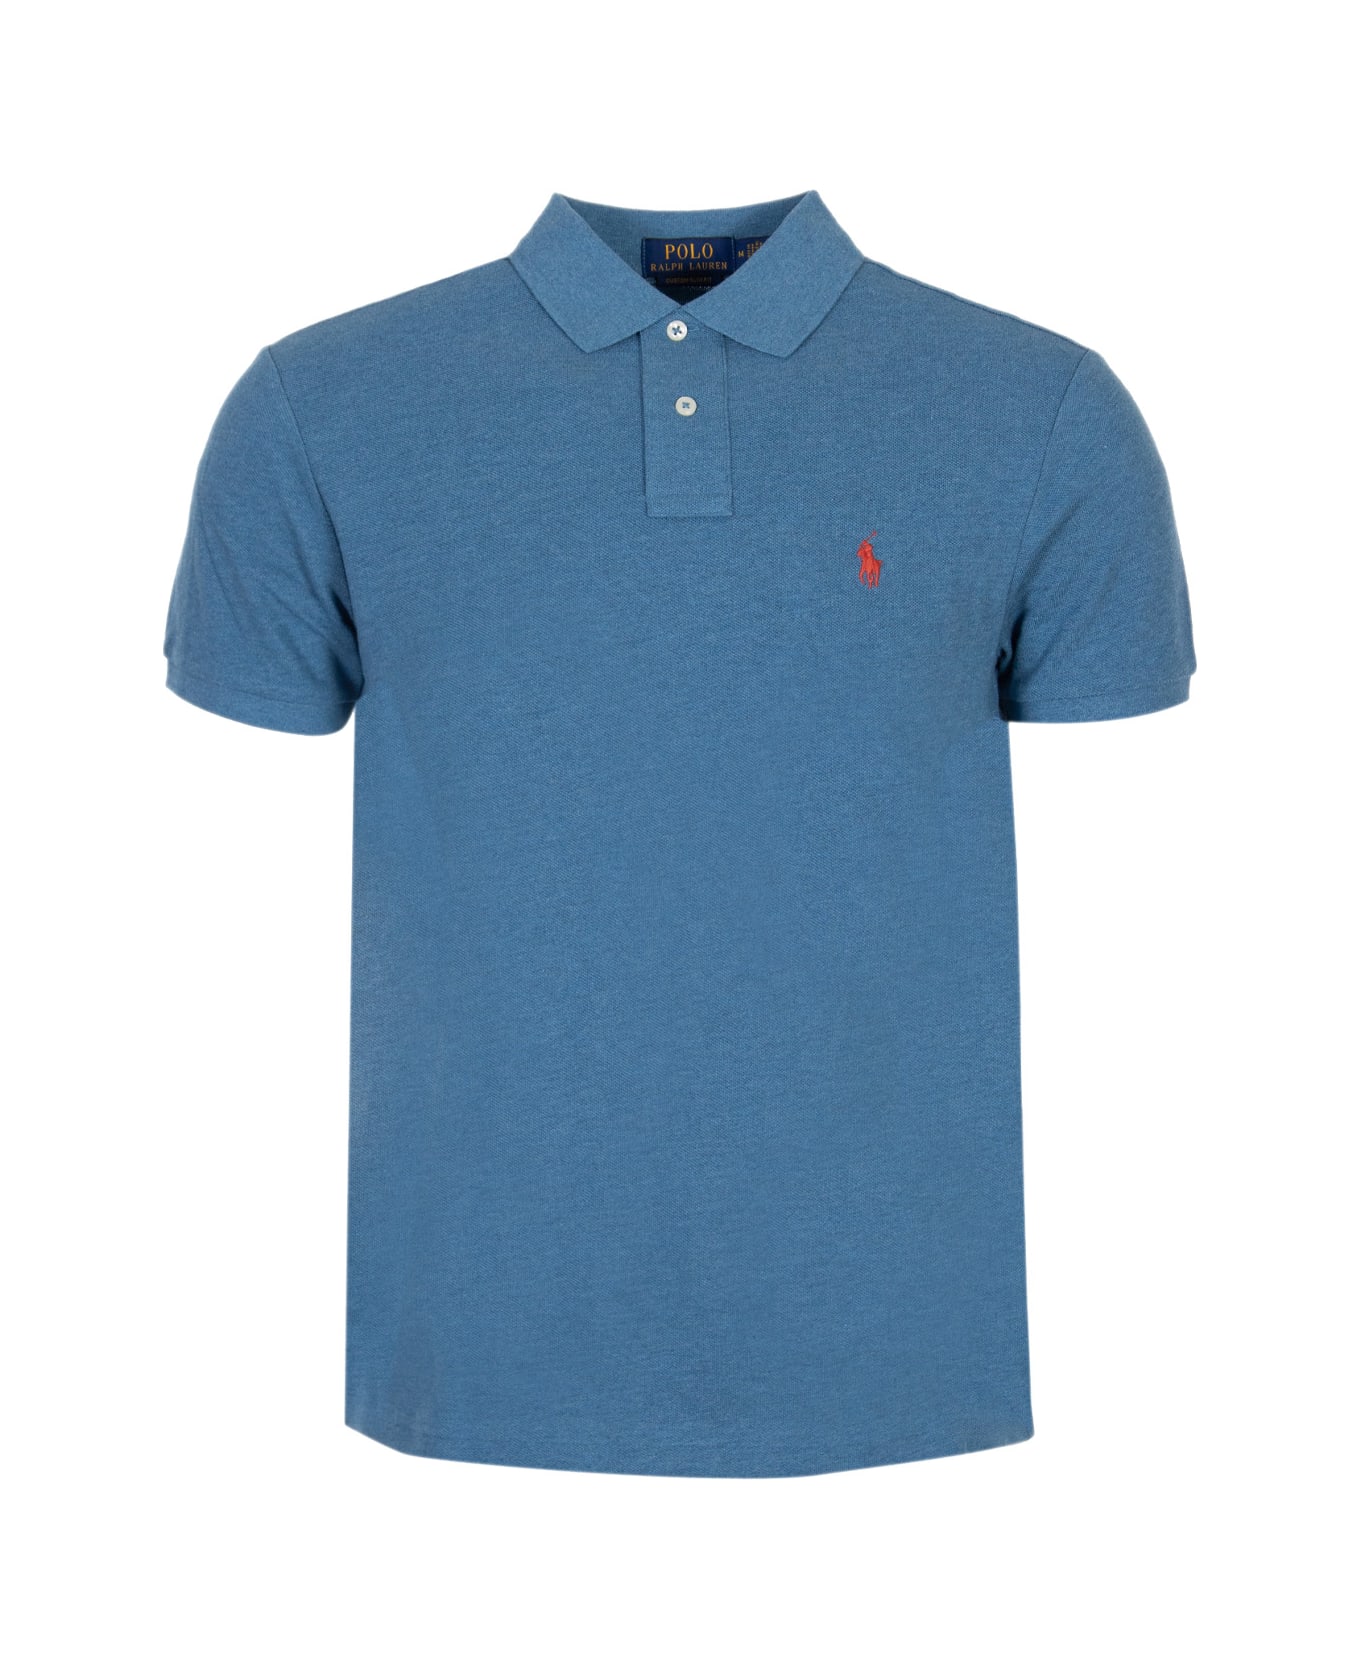 Polo Ralph Lauren Polo Shirt - blue